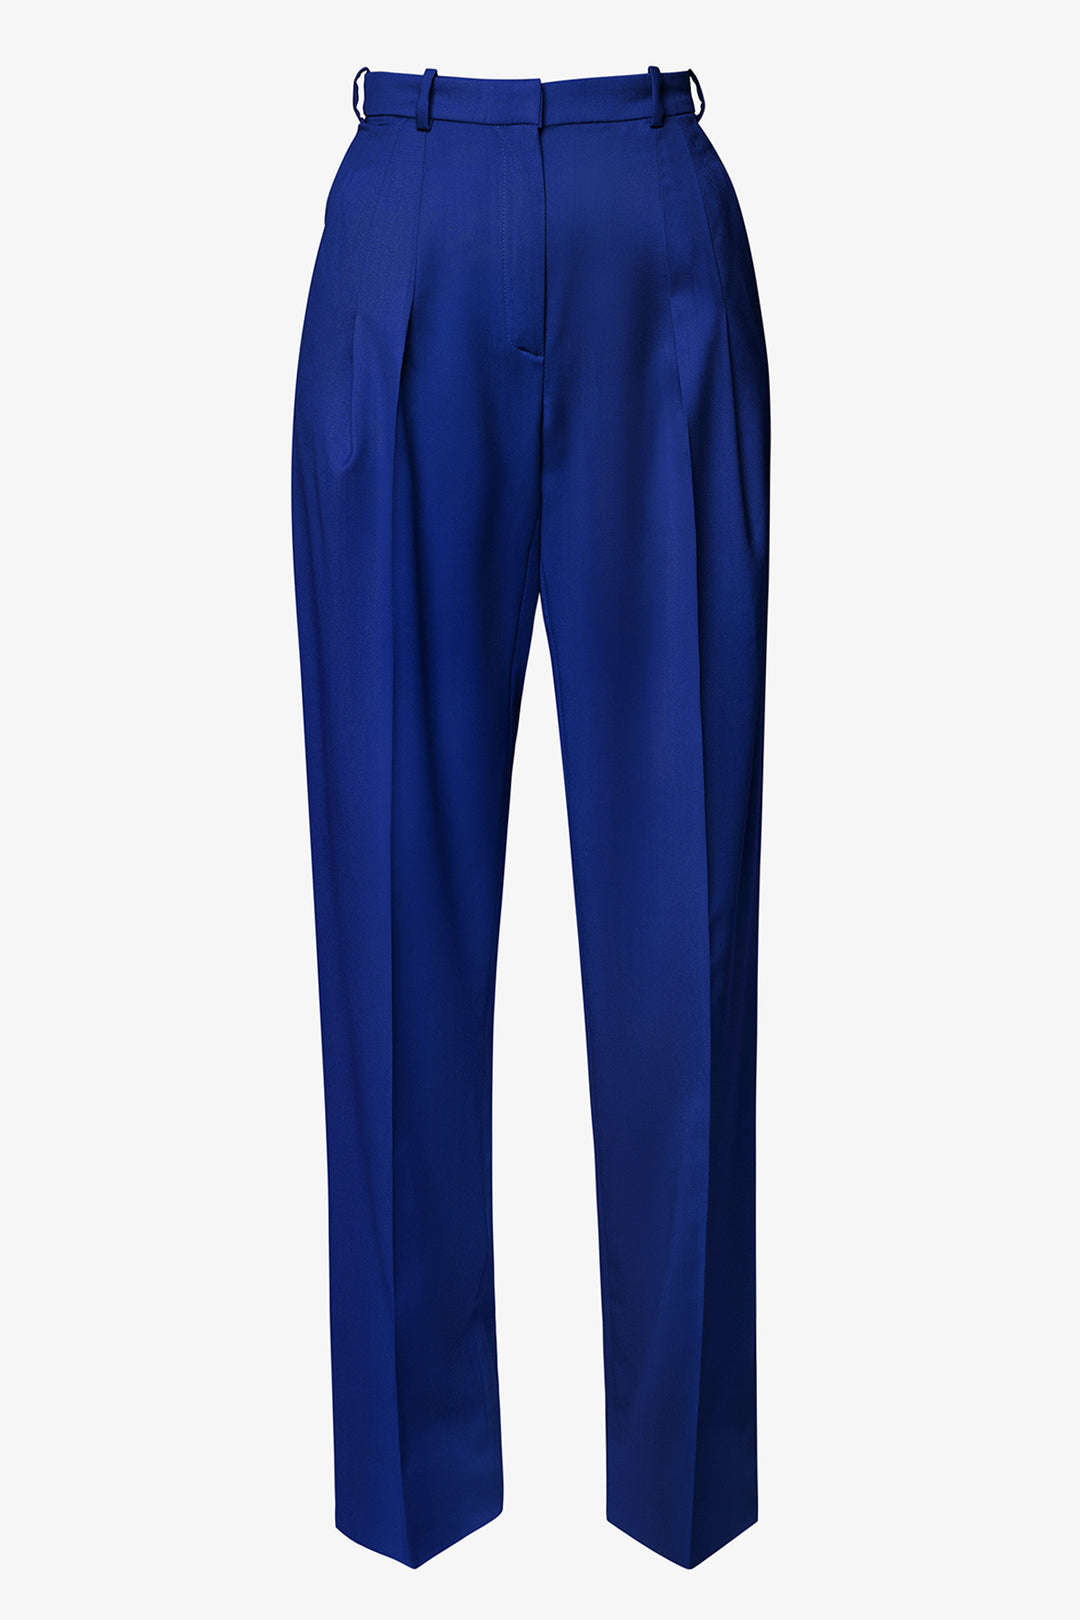 Electric Blue Cosmopolitan Wide Pants